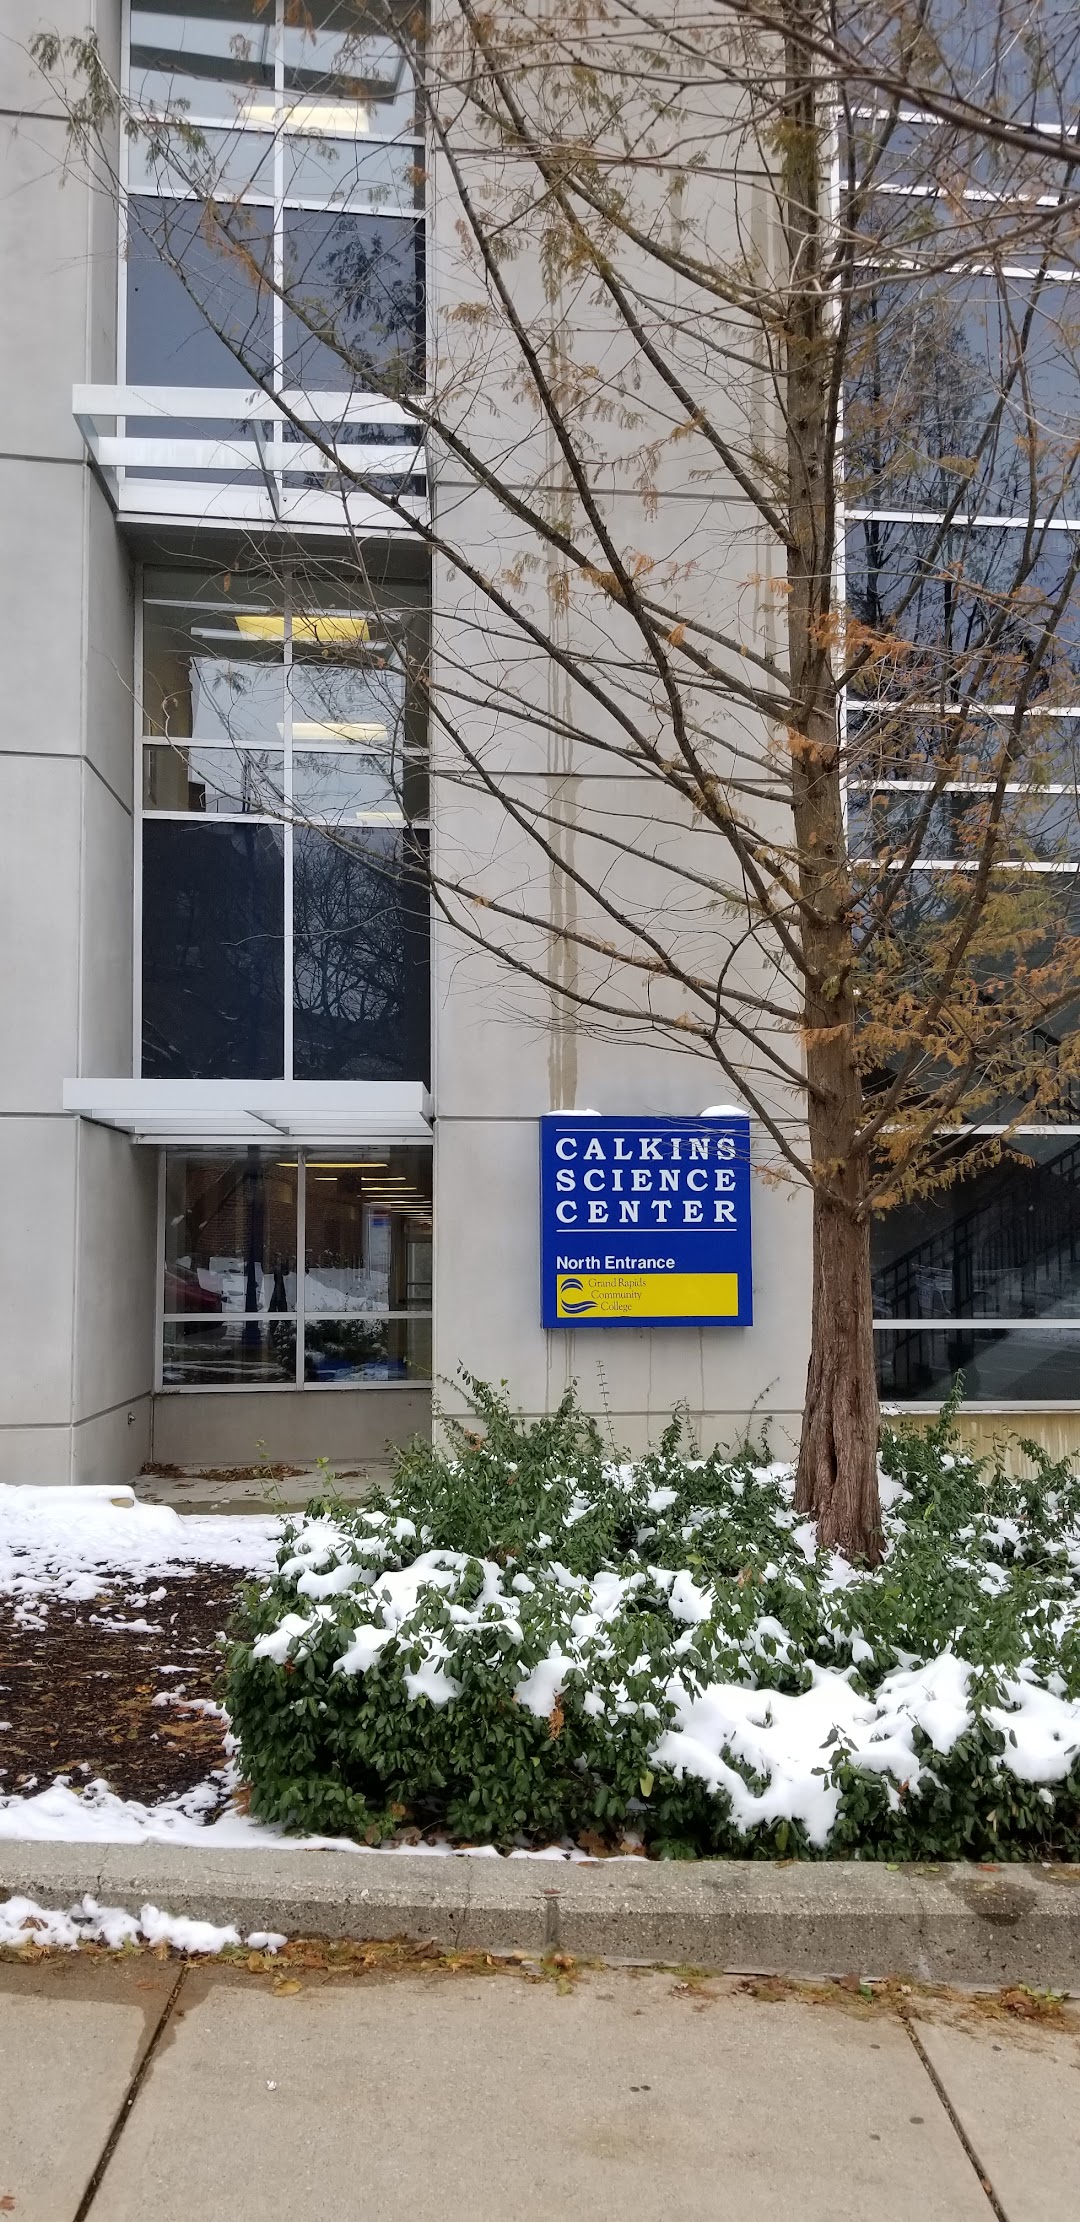 GRCC Calkins Science Center